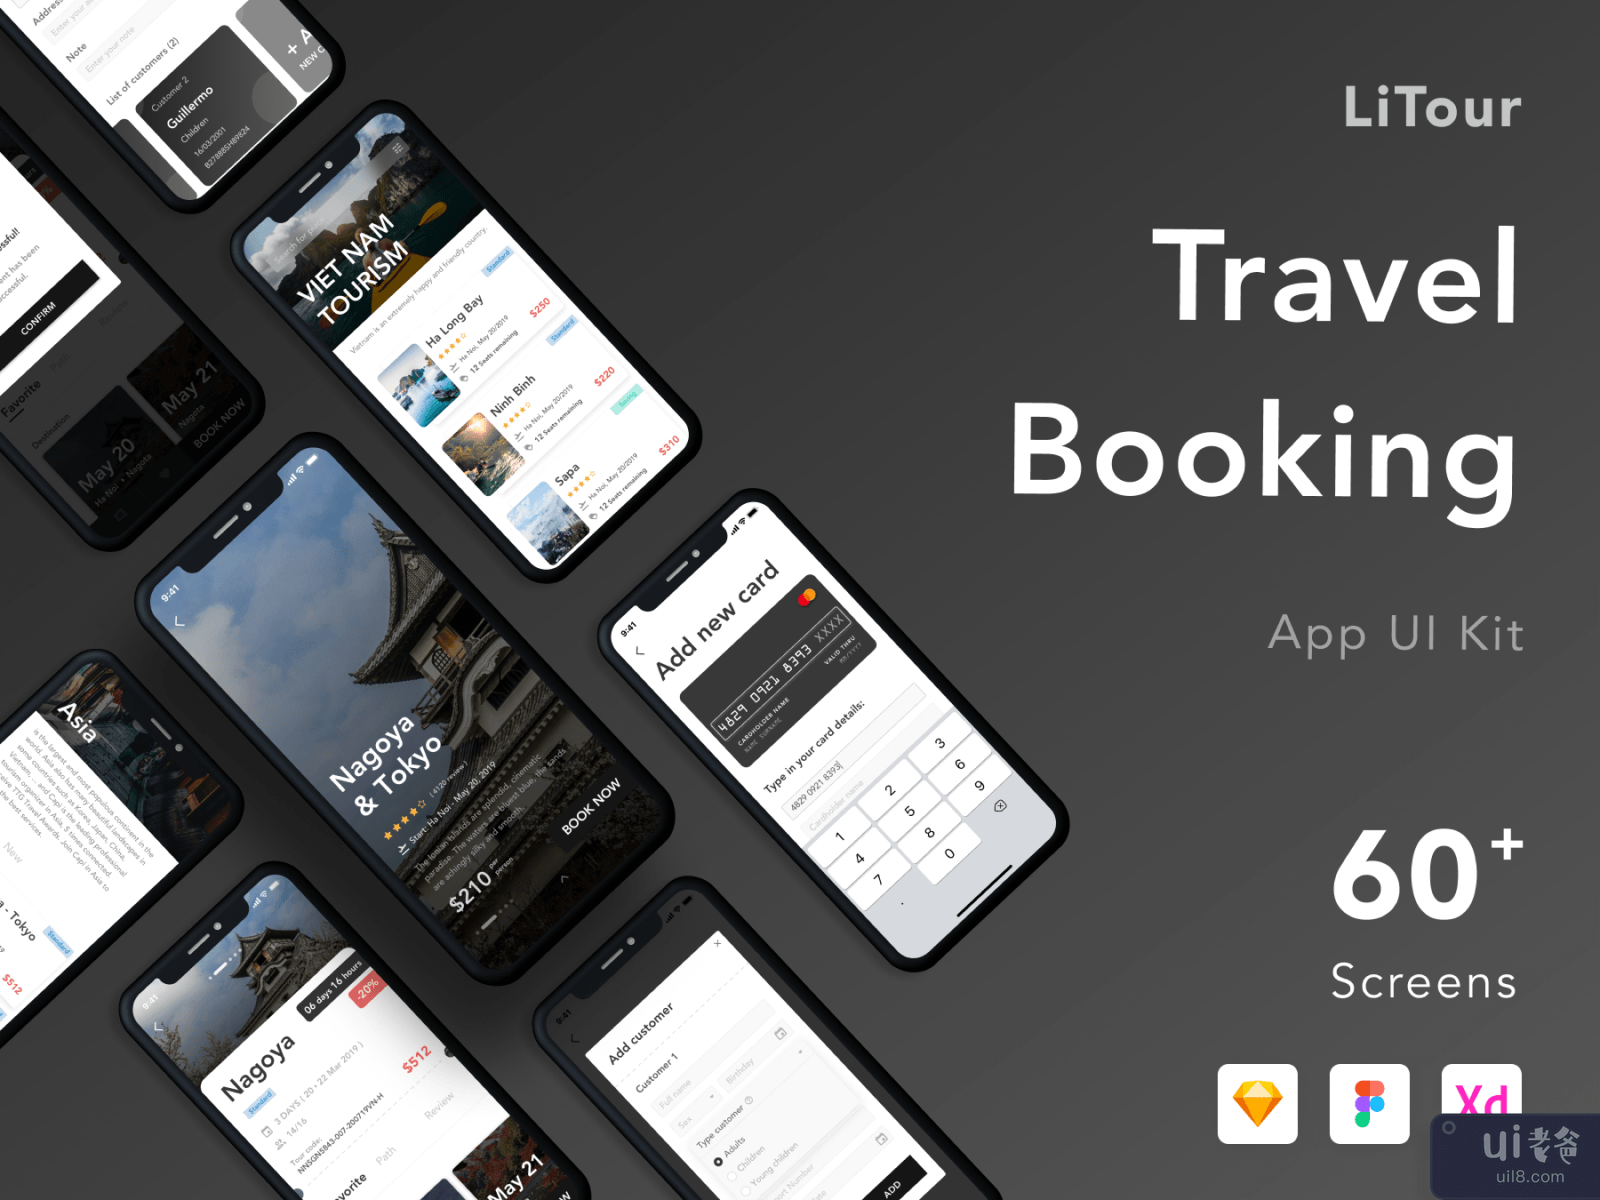 LiTour - Travel Booking App UI Kit #10